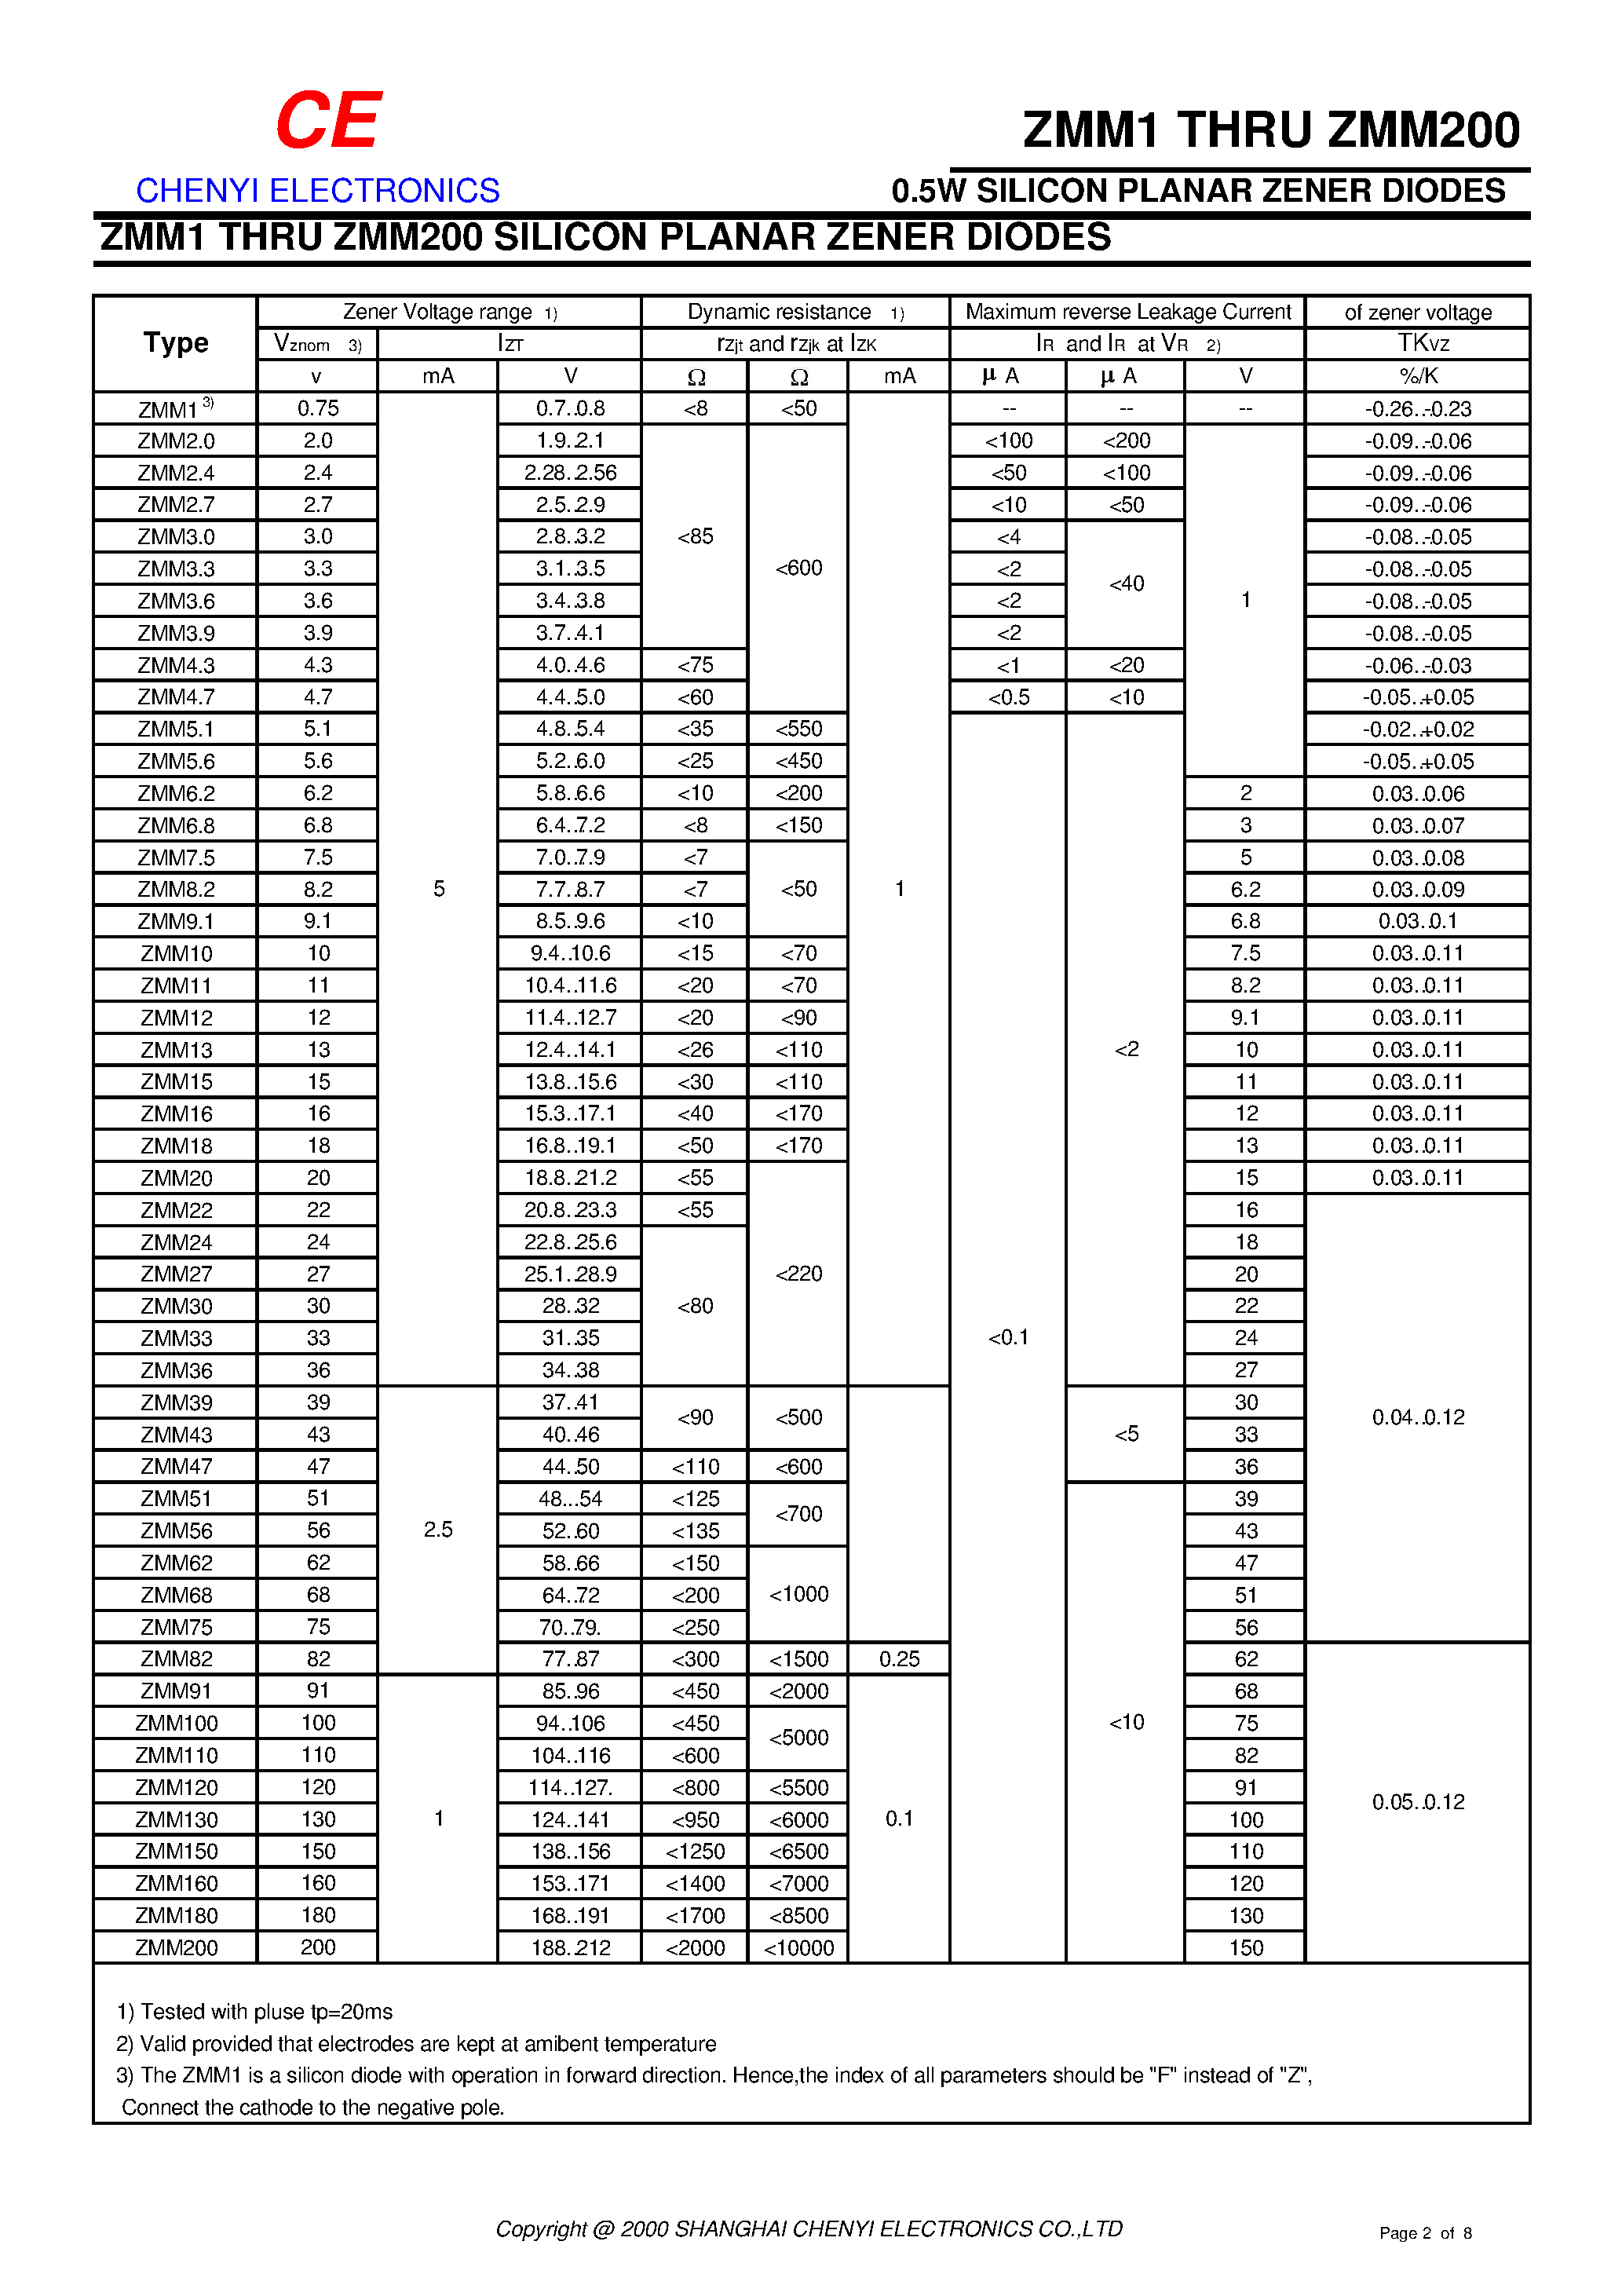 Datasheet ZMM20 - 0.5W SILICON PLANAR ZENER DIODES page 2